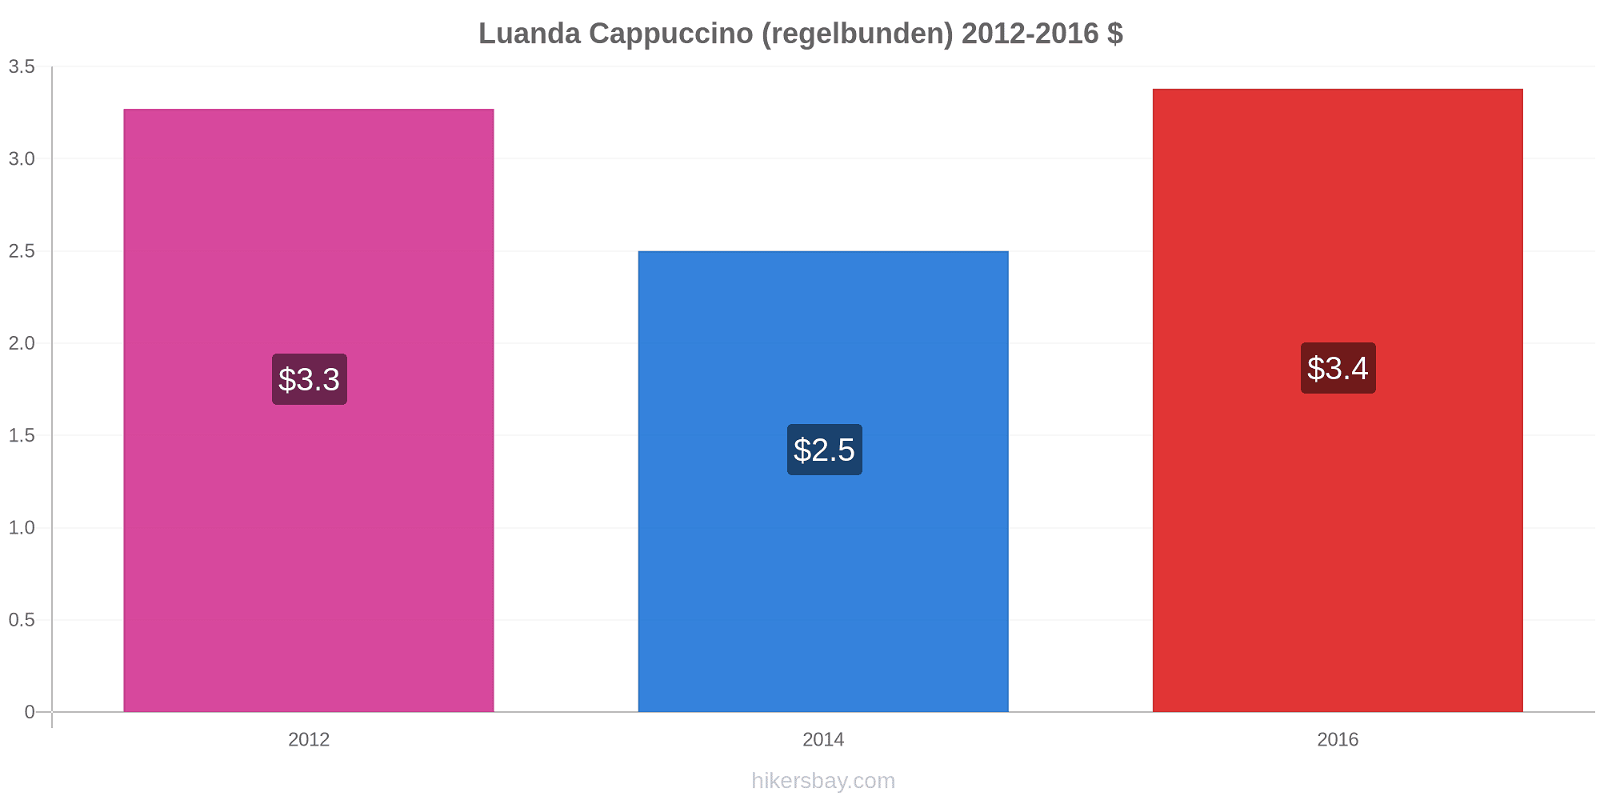 Luanda prisförändringar Cappuccino (regelbunden) hikersbay.com